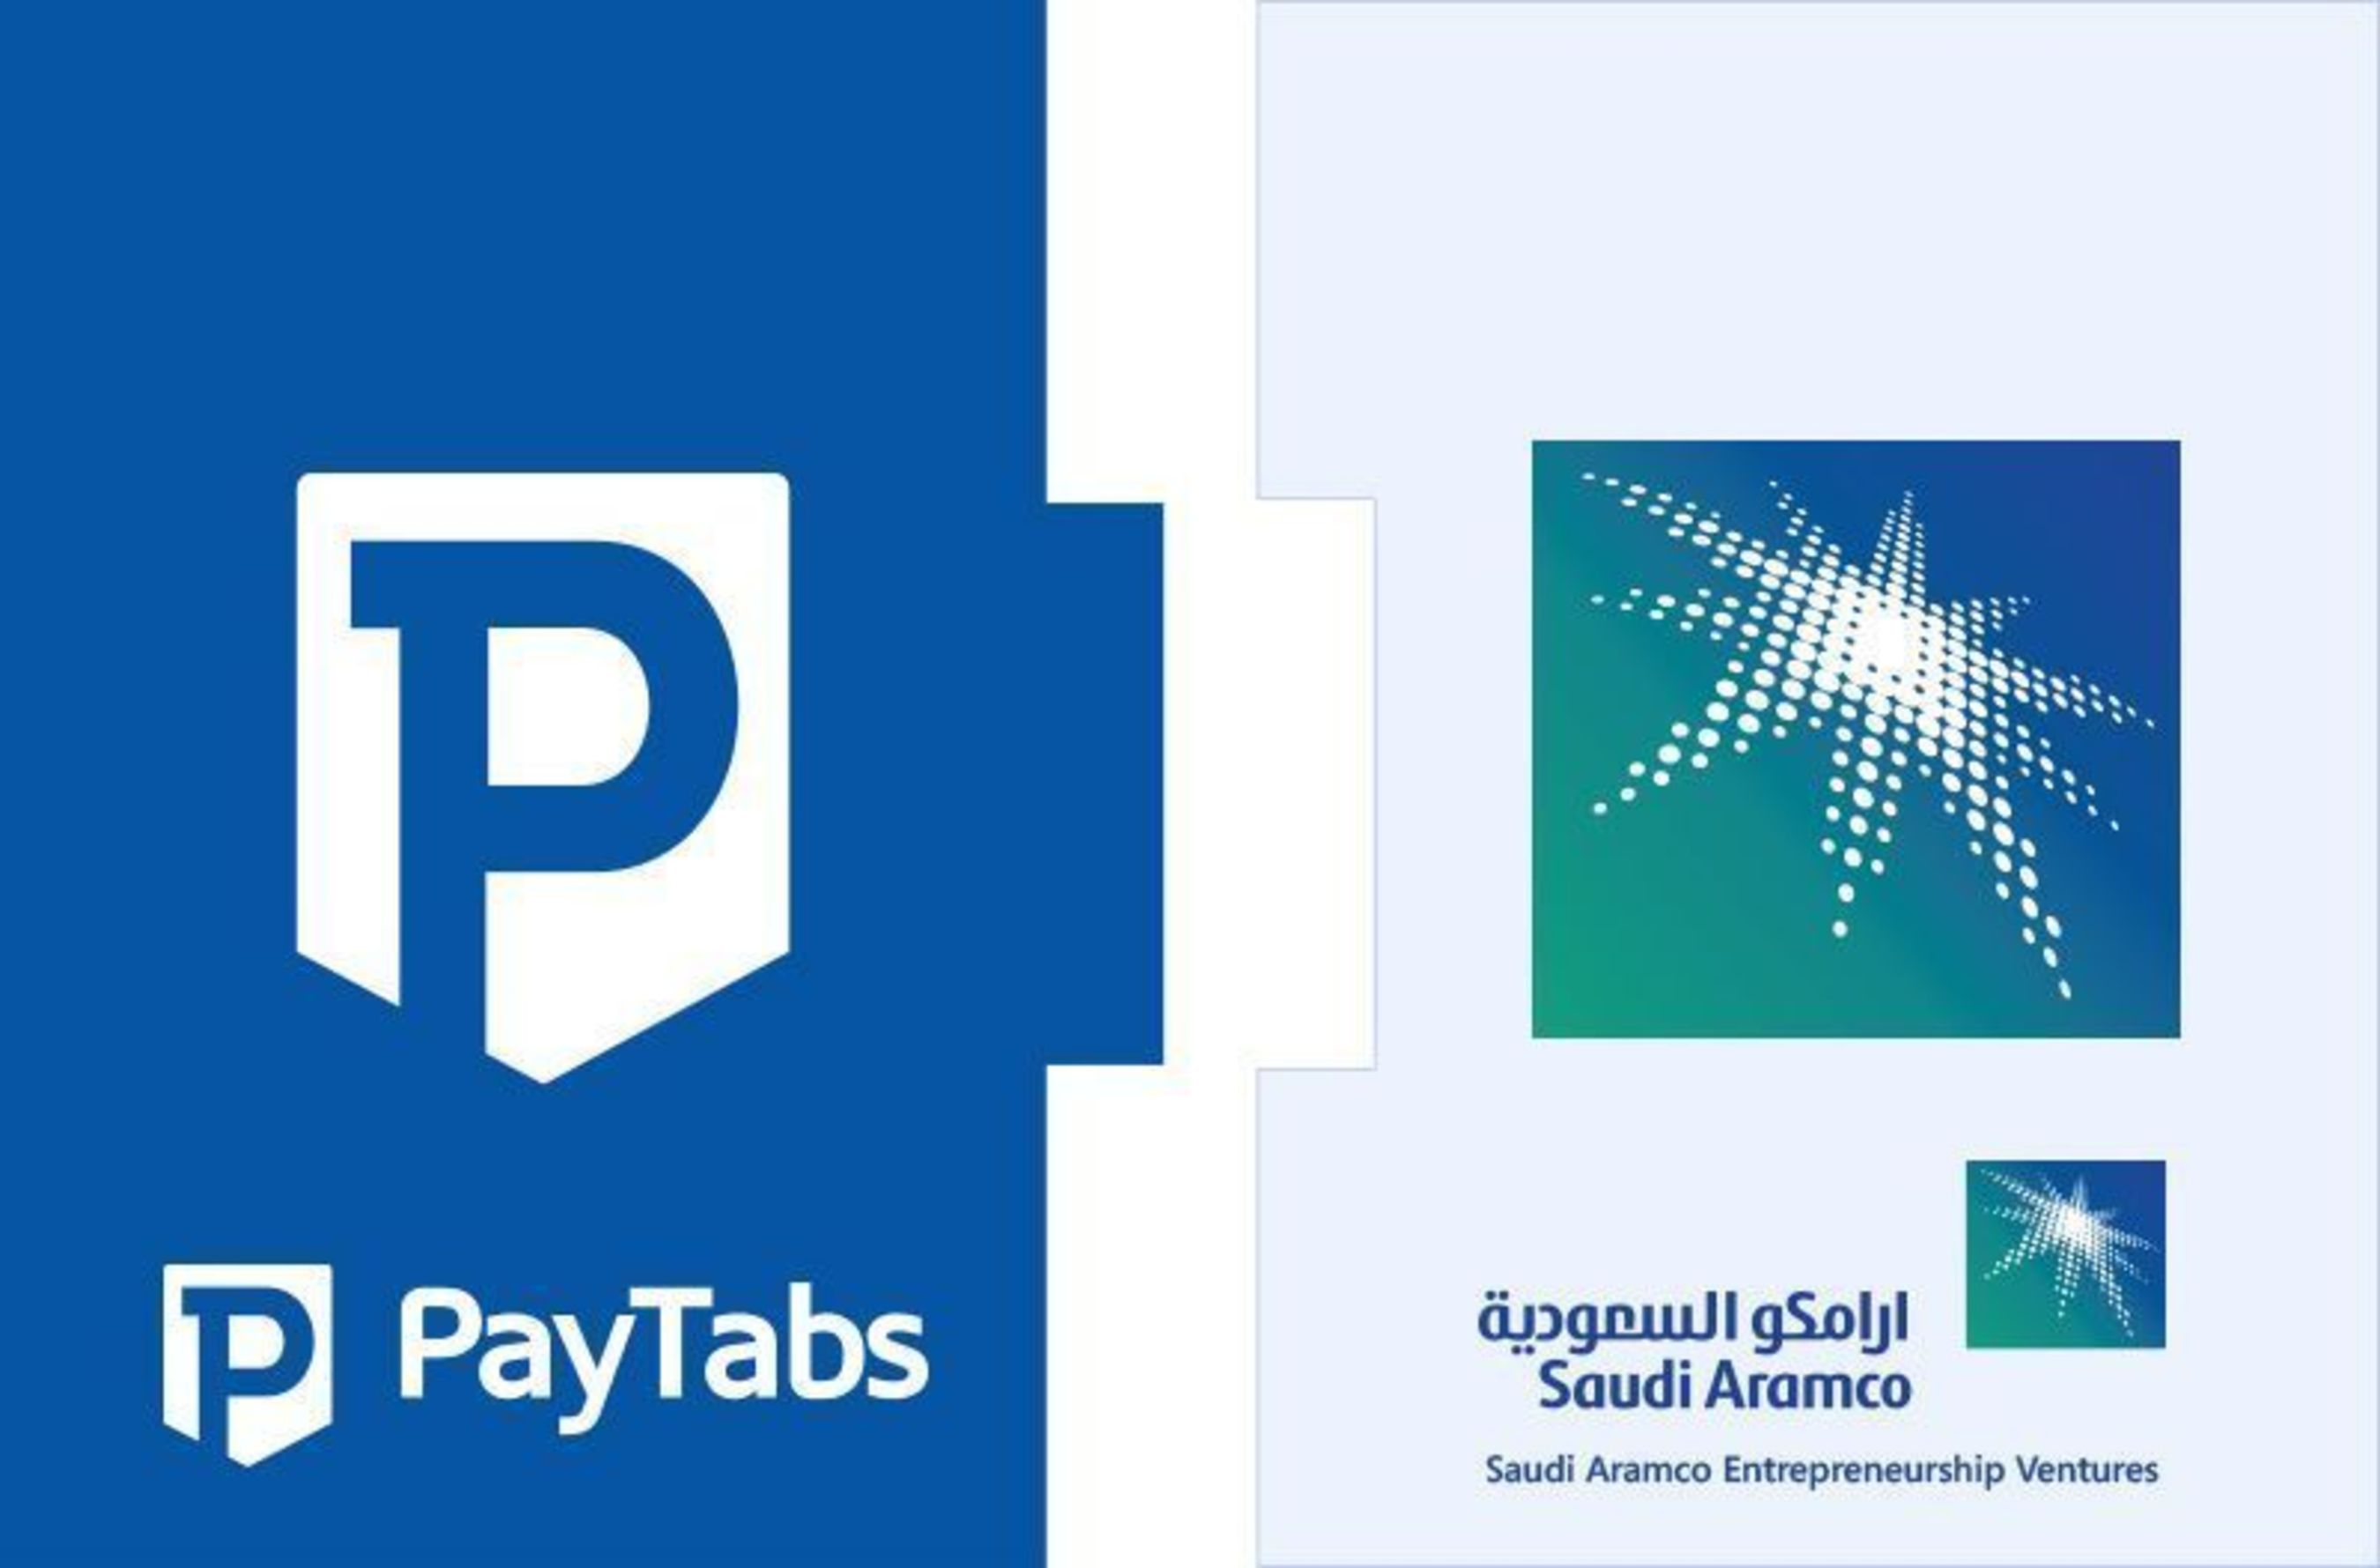 Saudi Aramco Entrepreneurship venture invests in PayTabs (PRNewsFoto/PayTabs LLC Holding Company)